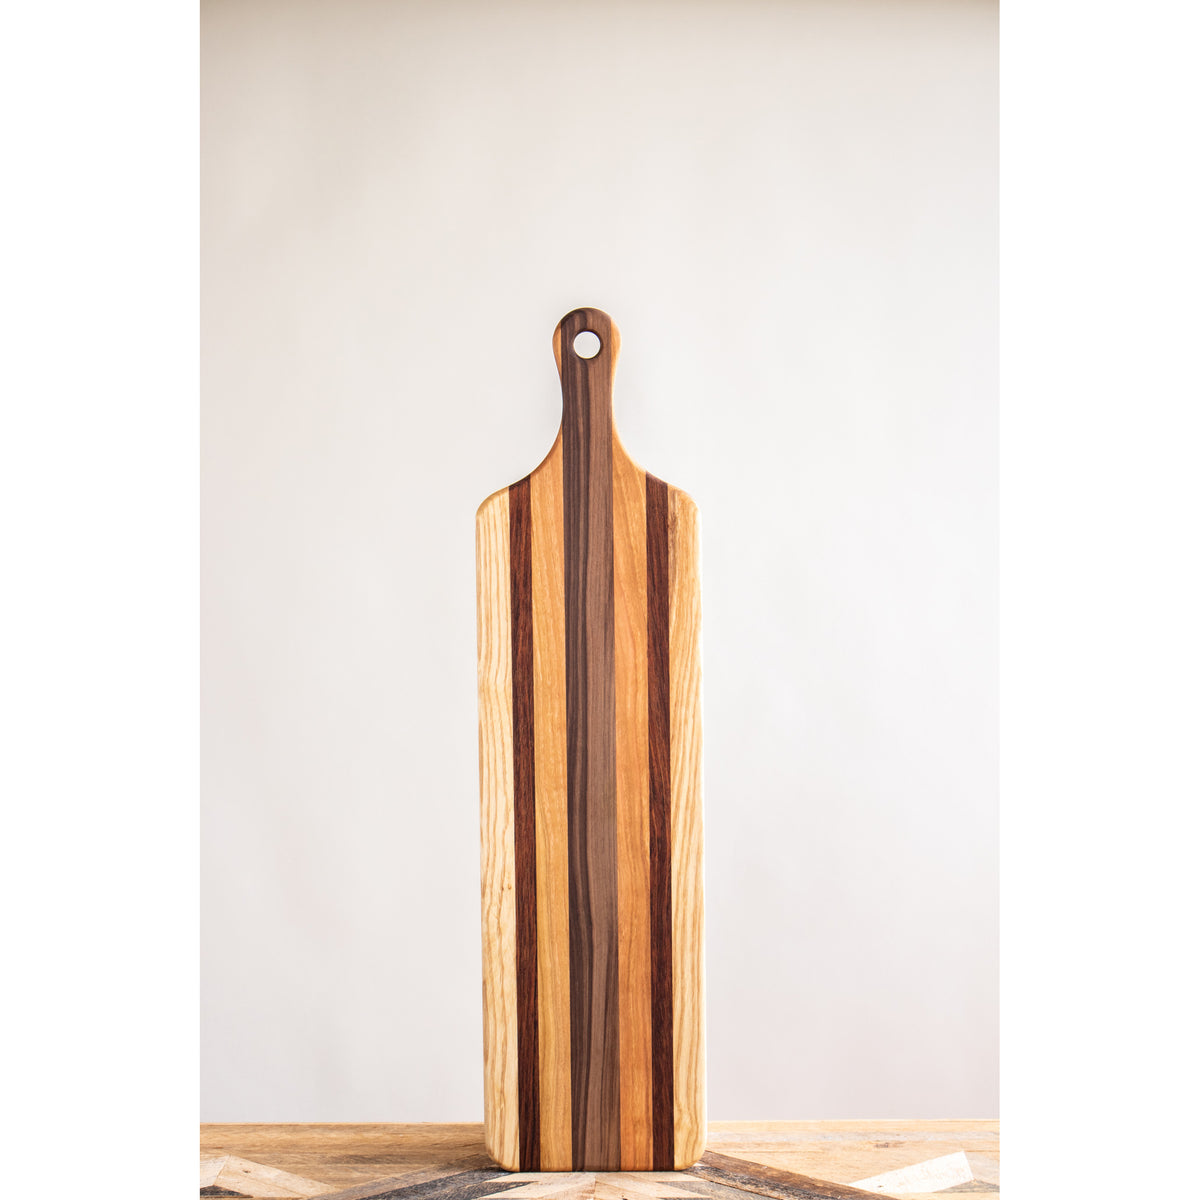 Kessler Woodworking  Long Bread Board – The Artisan's Bench